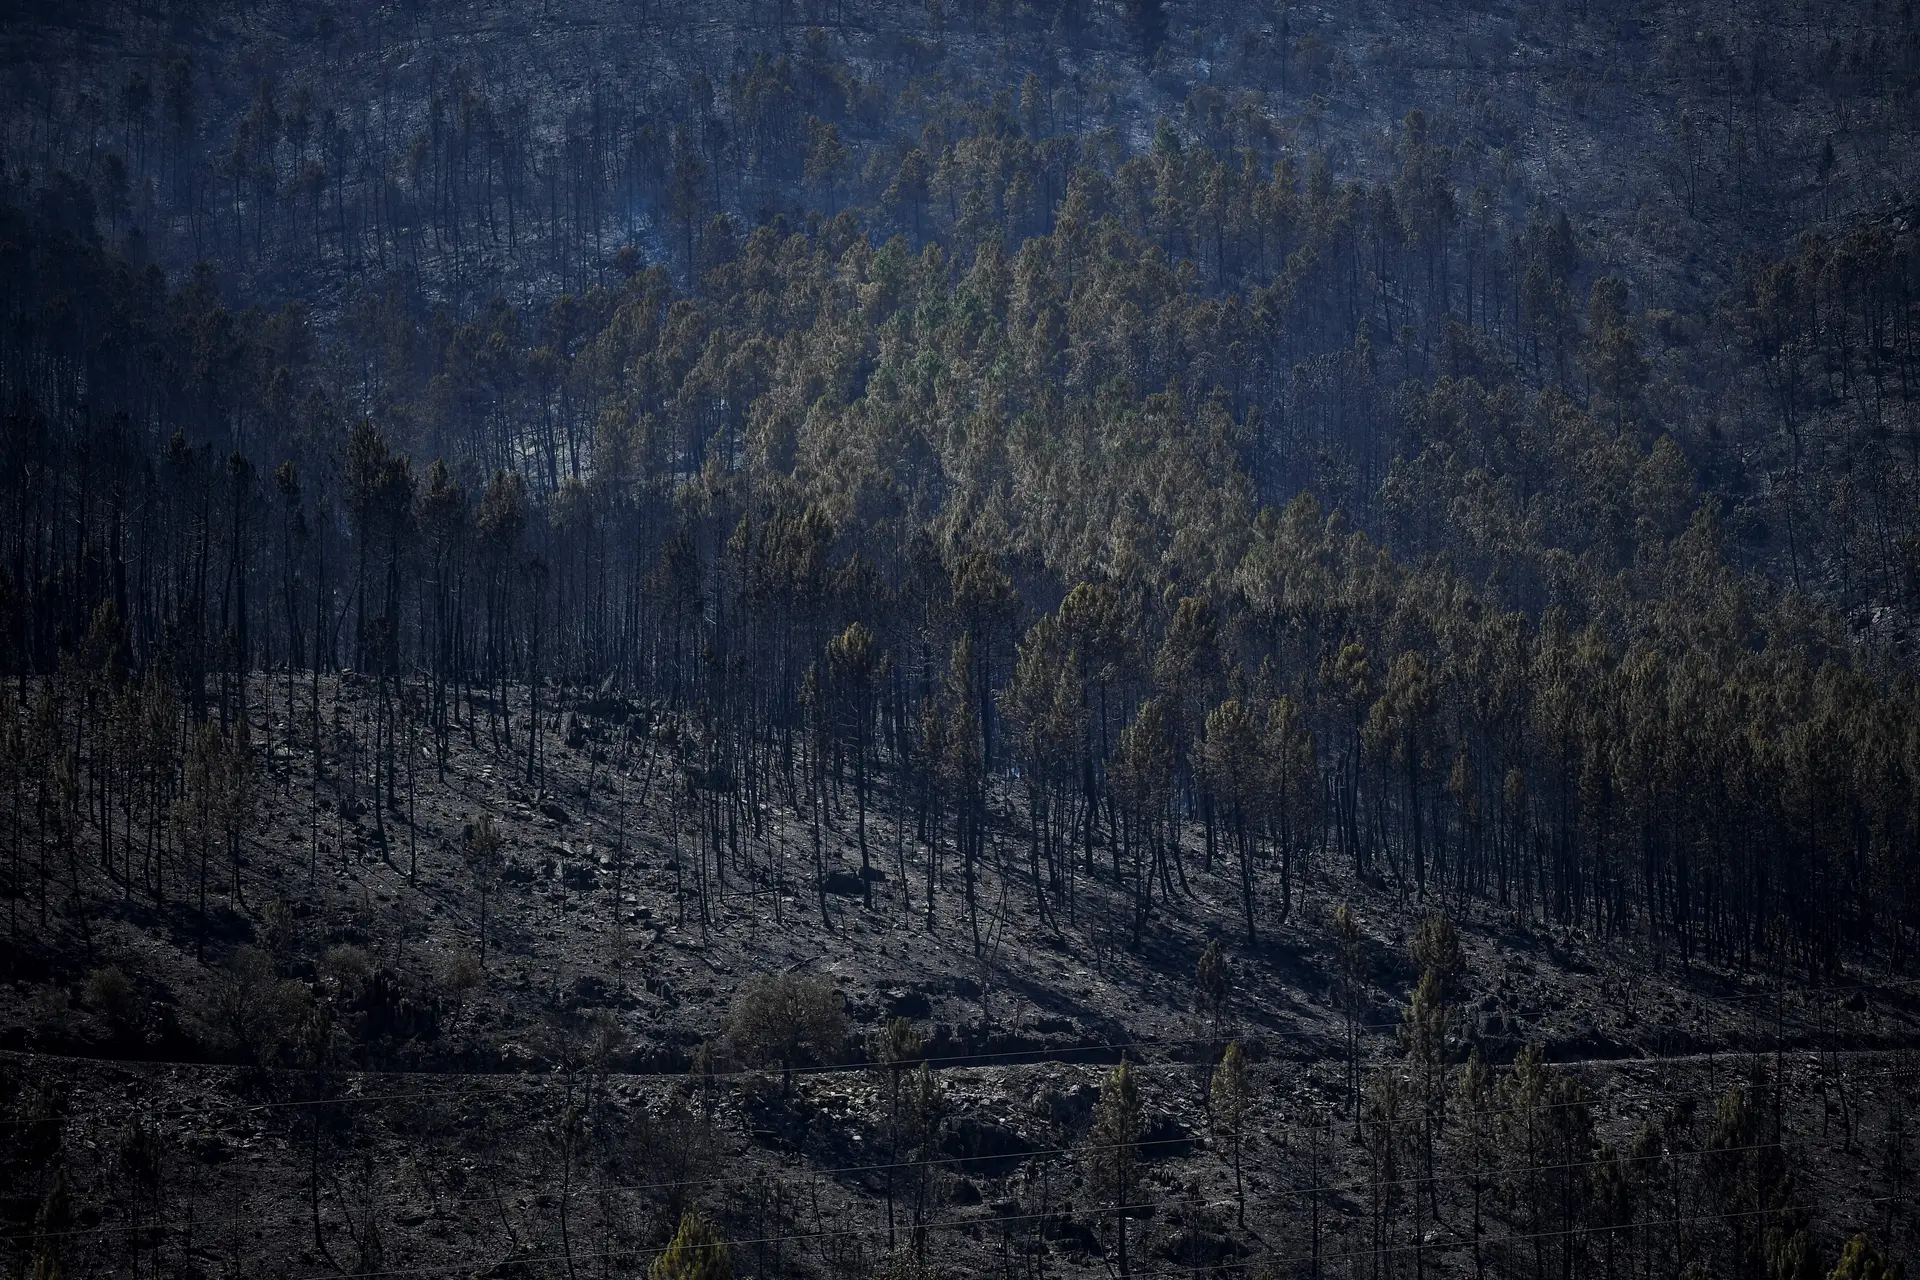 Incêndio na Serra da Estrela: levantamento dos danos e prejuízos foi antecipado